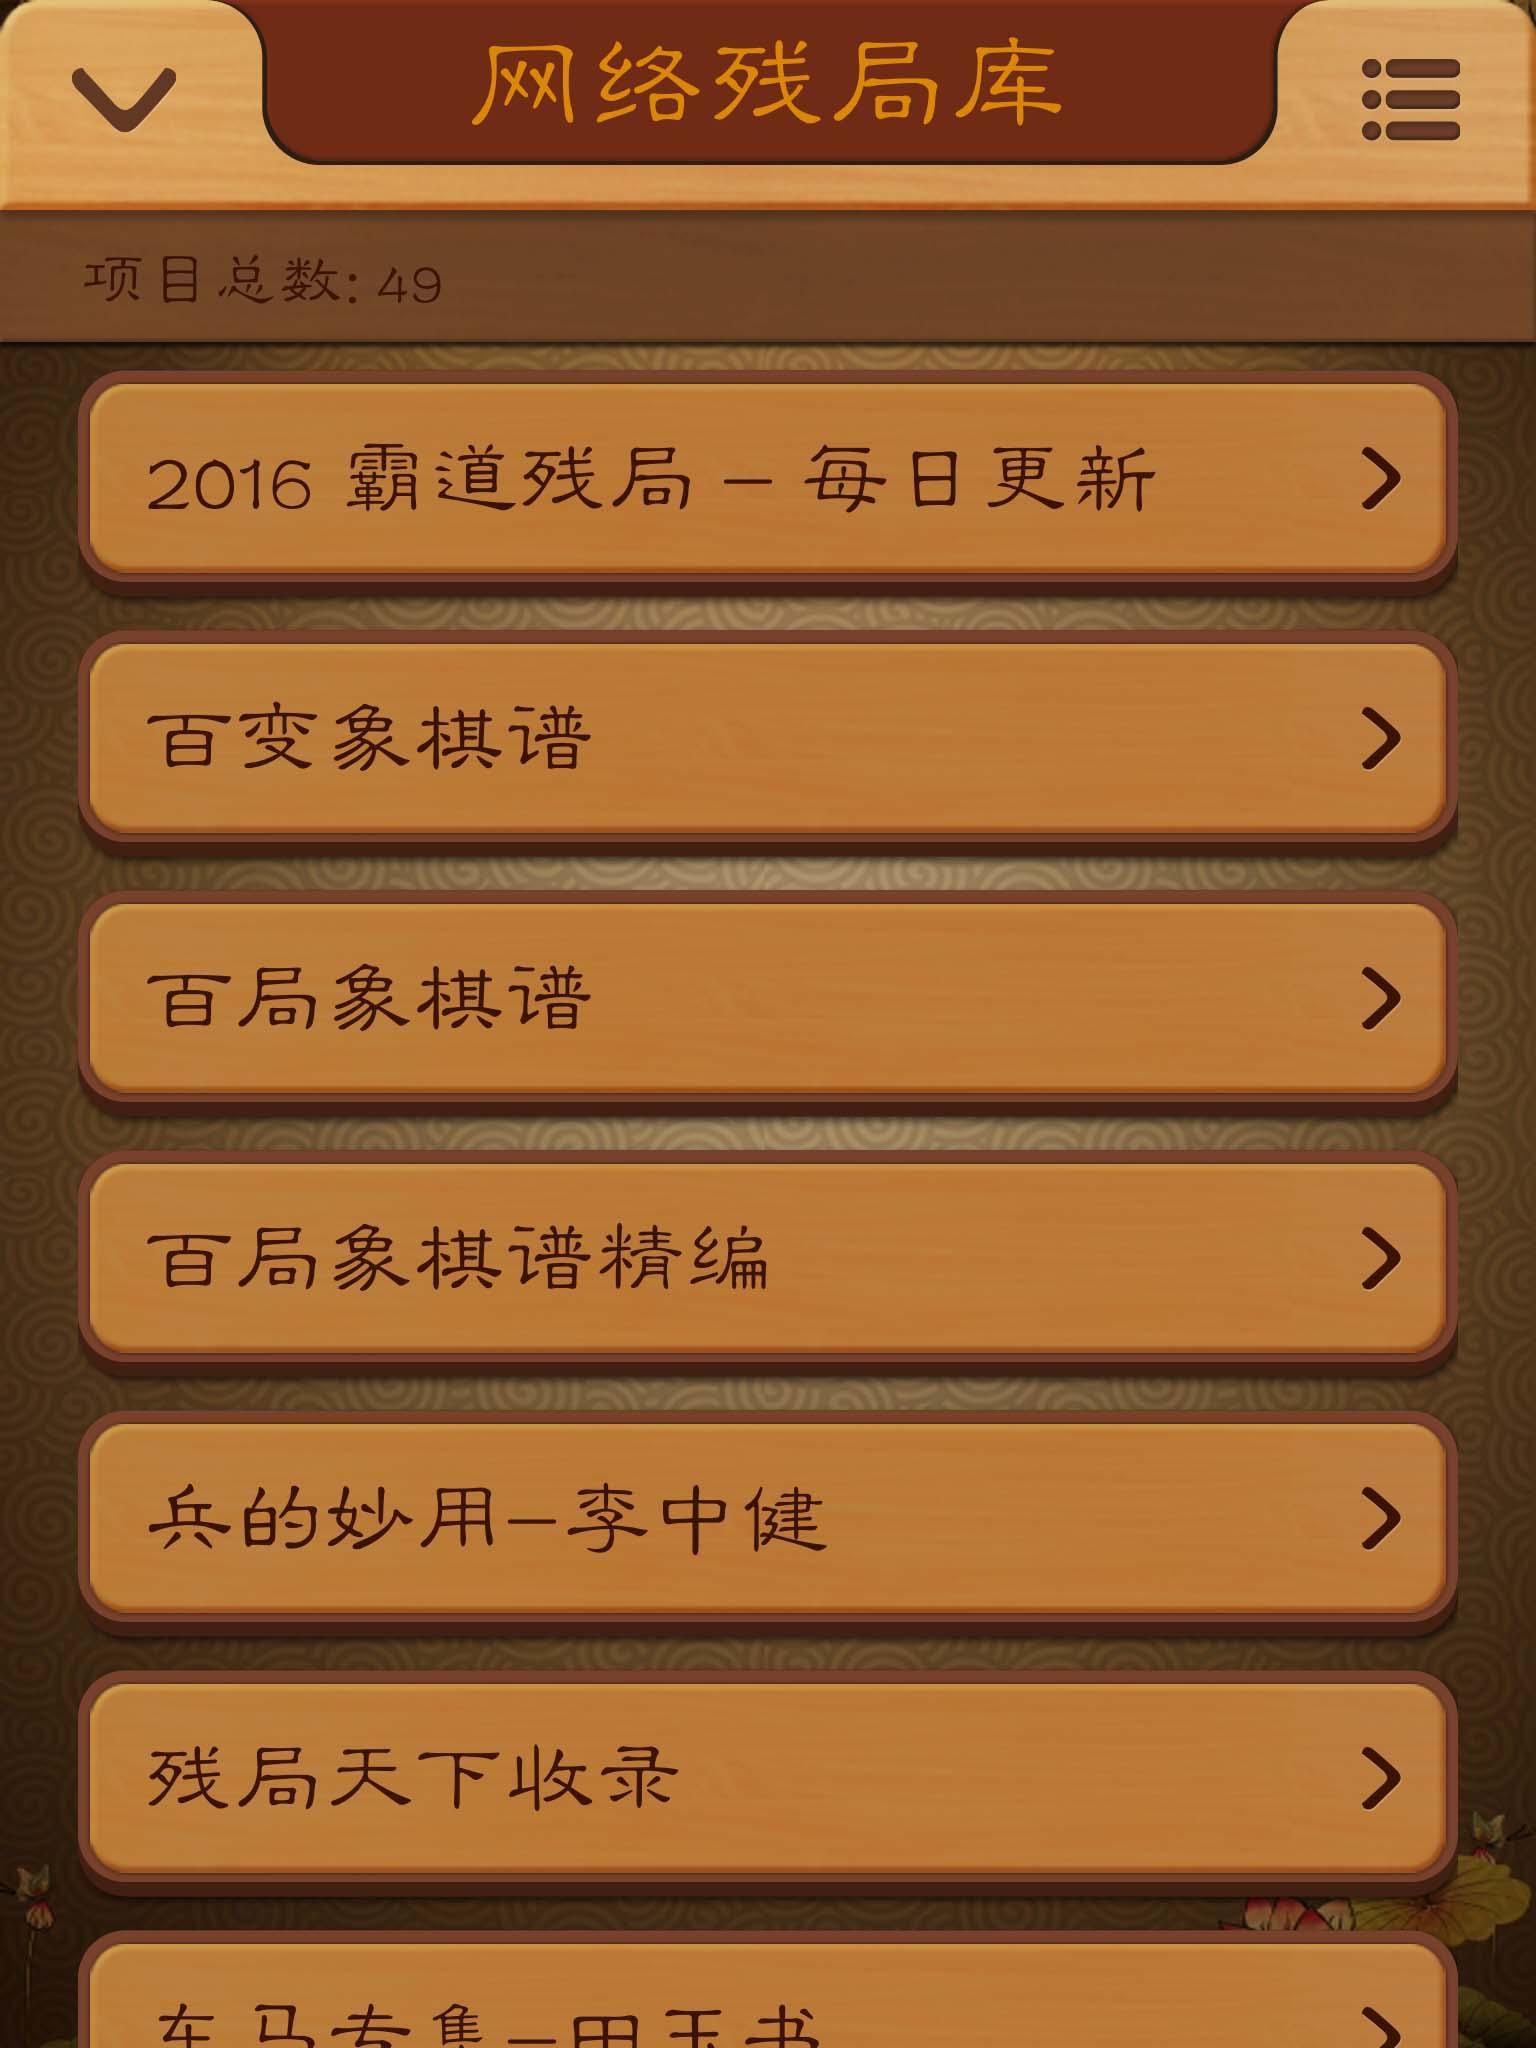 Chinese Chess, Xiangqi - many endgame and replay 3.9.6 Screenshot 14